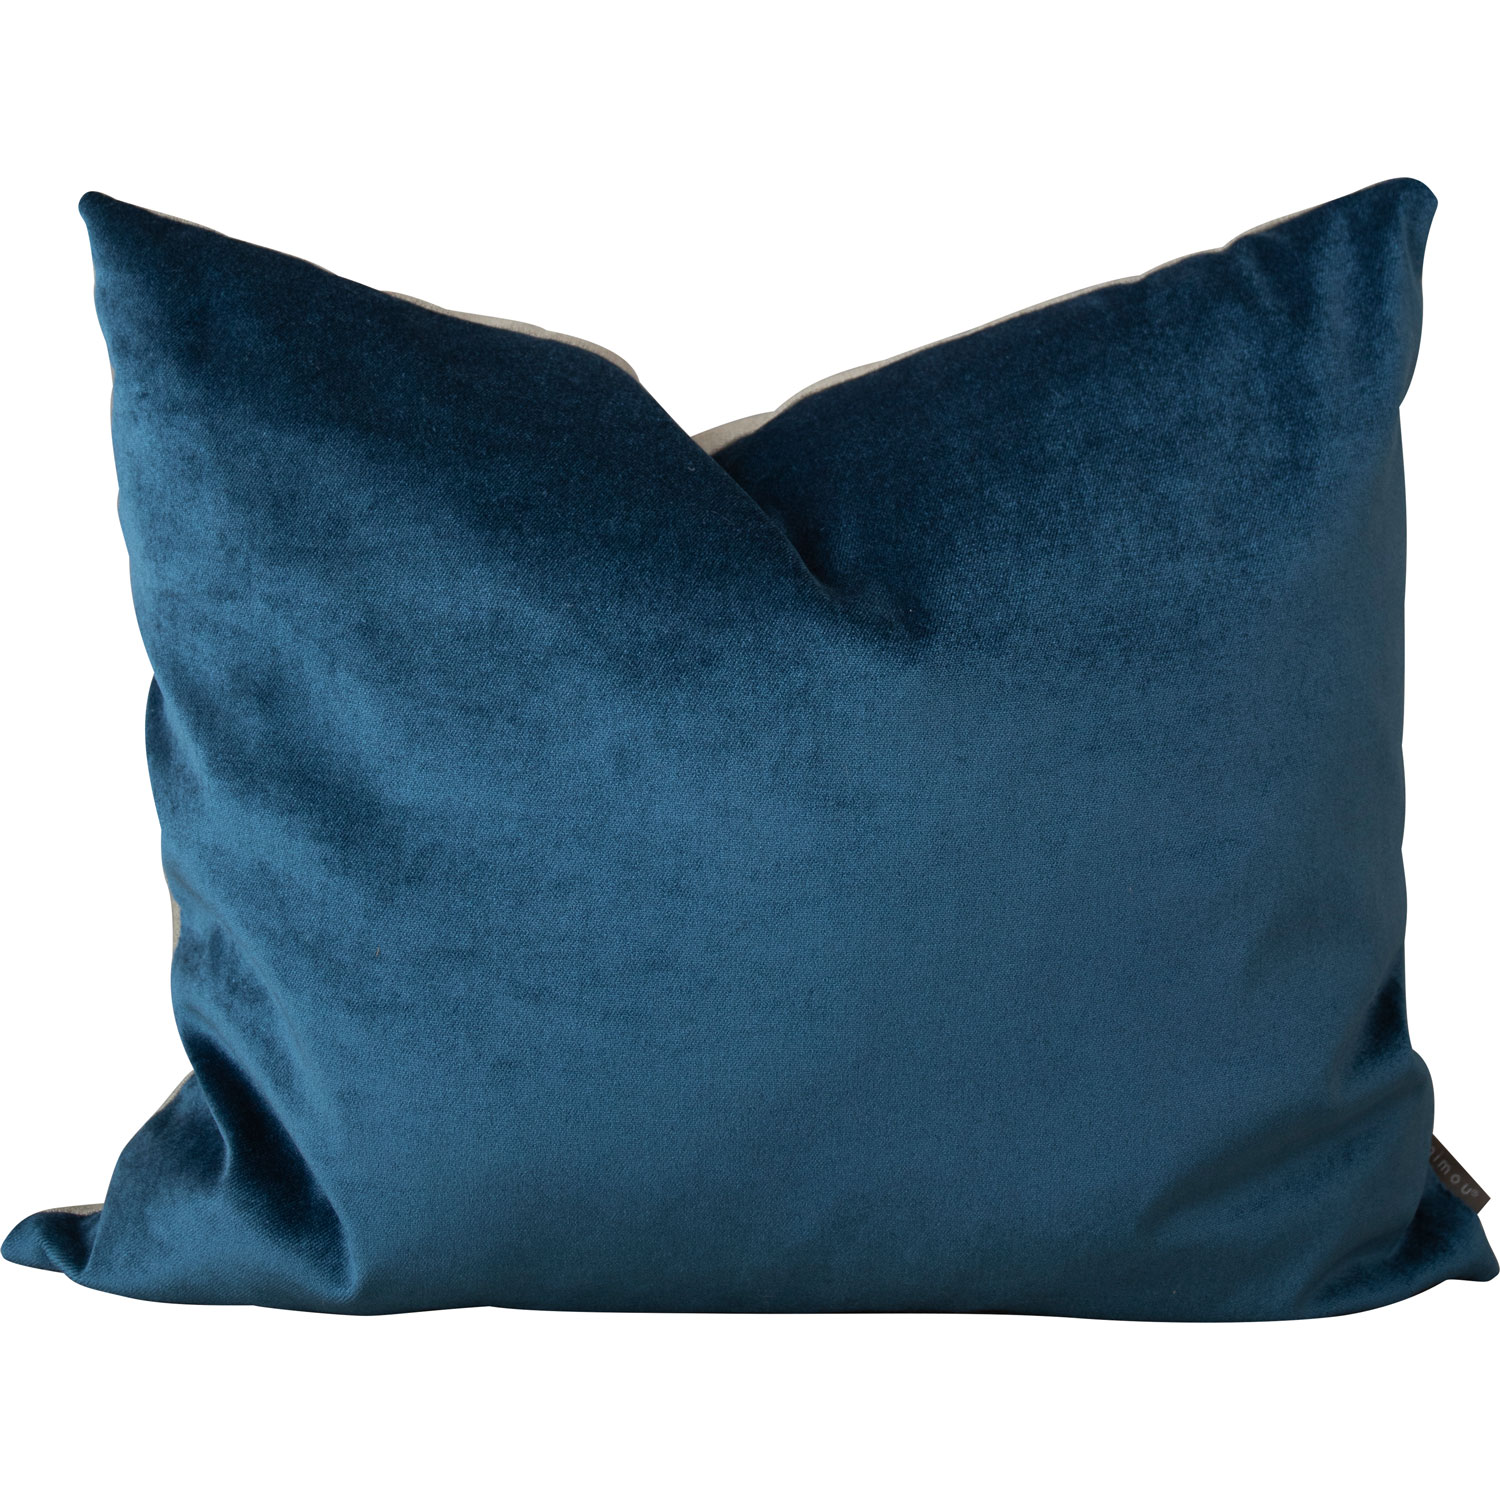 Mimou Focus Recycling Linen/Velvet Pute 50x60 cm, Denim Blue Polyester